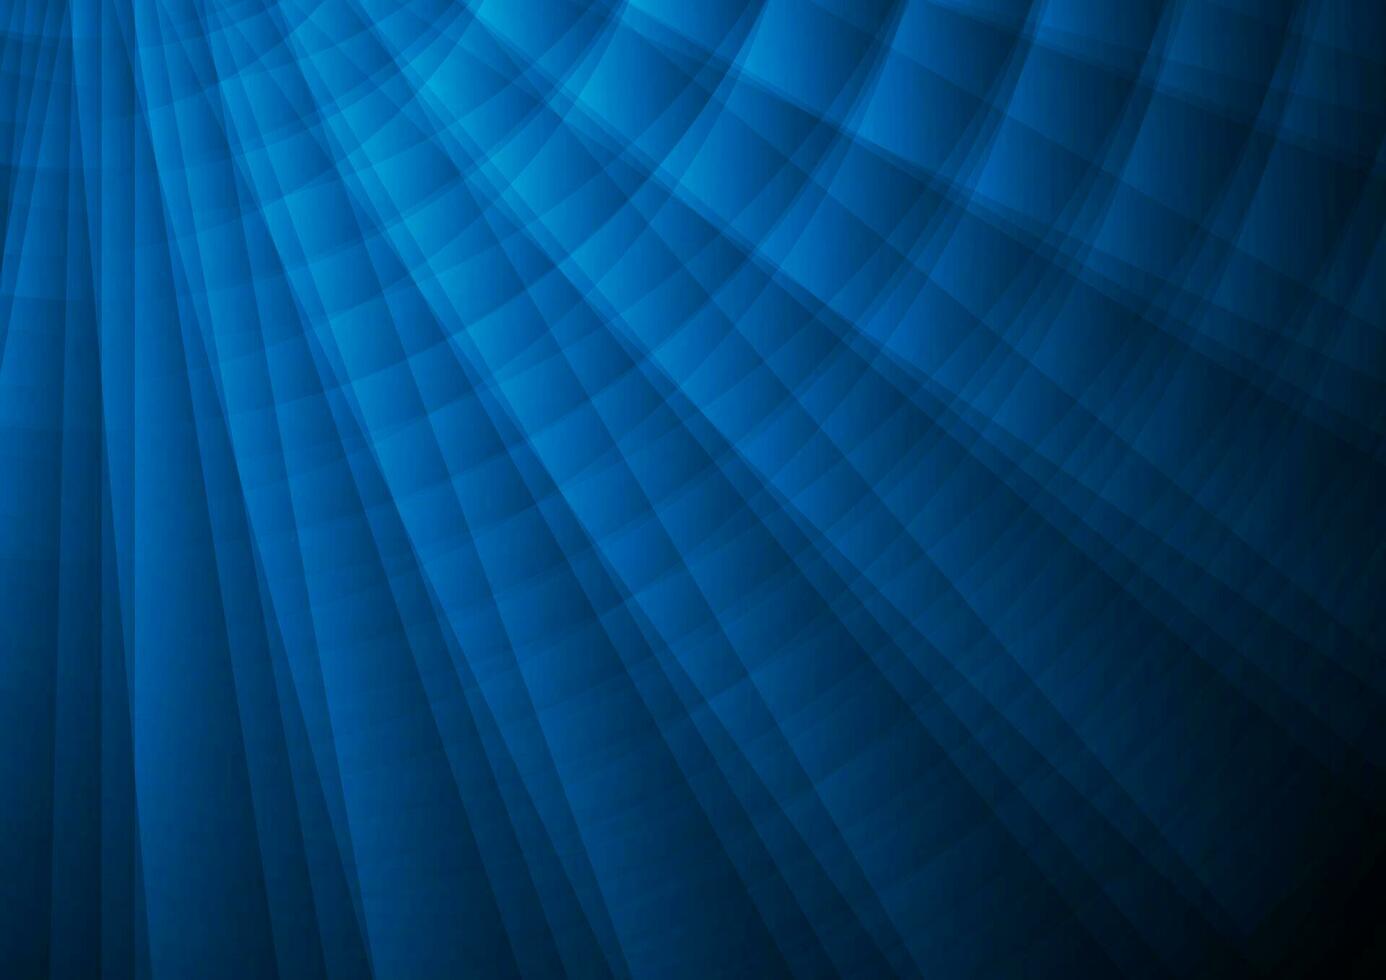 Dark blue abstract hi-tech background vector